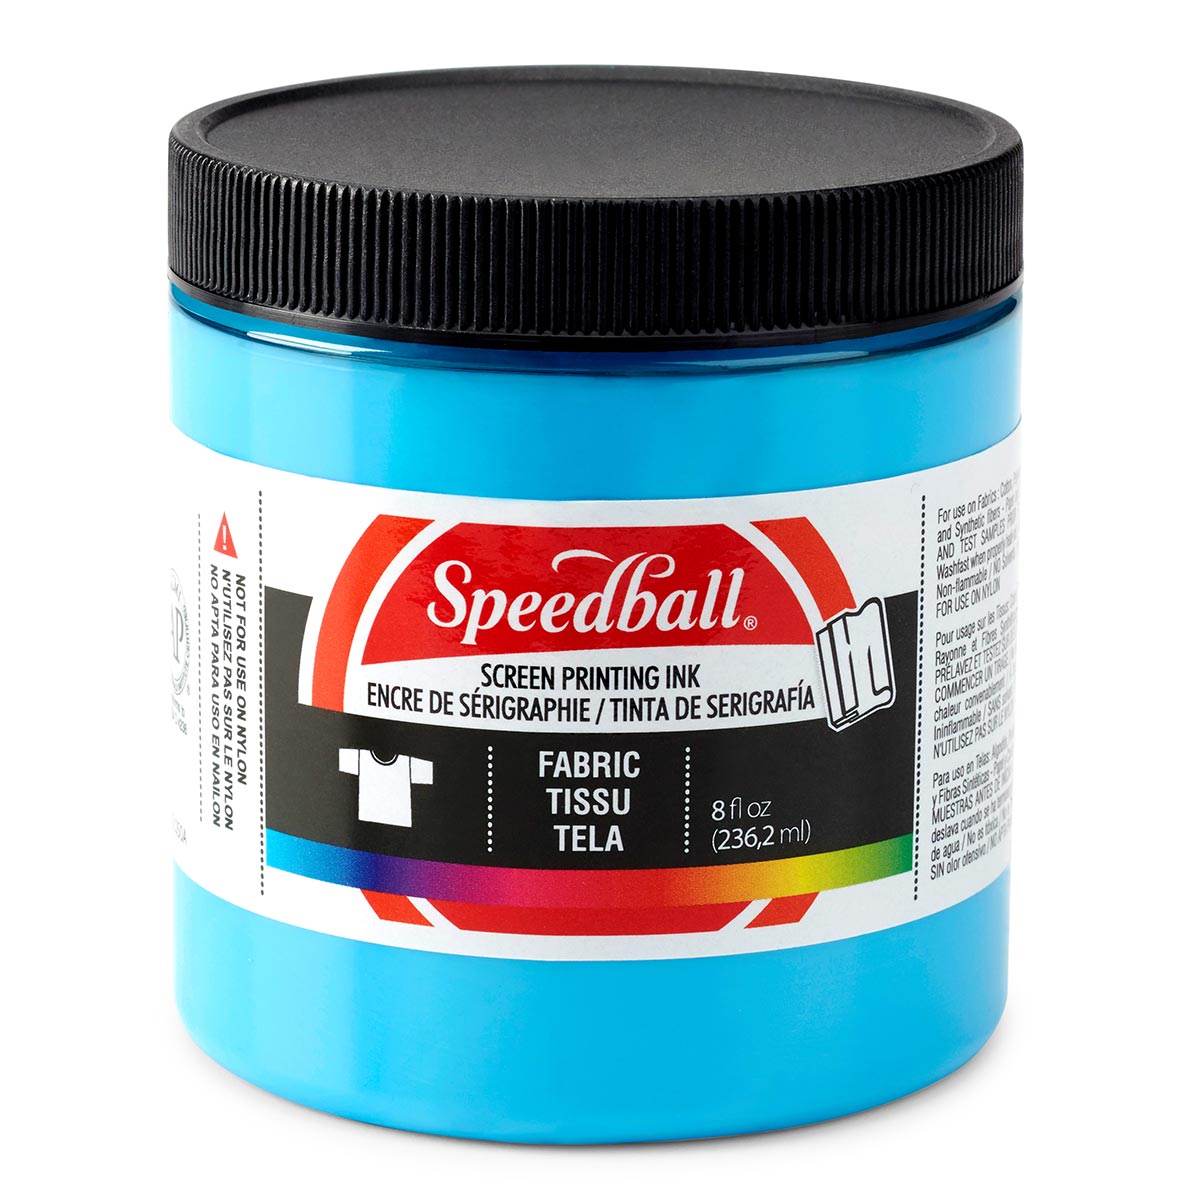 Speedball - Encre de sérigraphie pour tissu 236 ml (8 oz) - Bleu paon